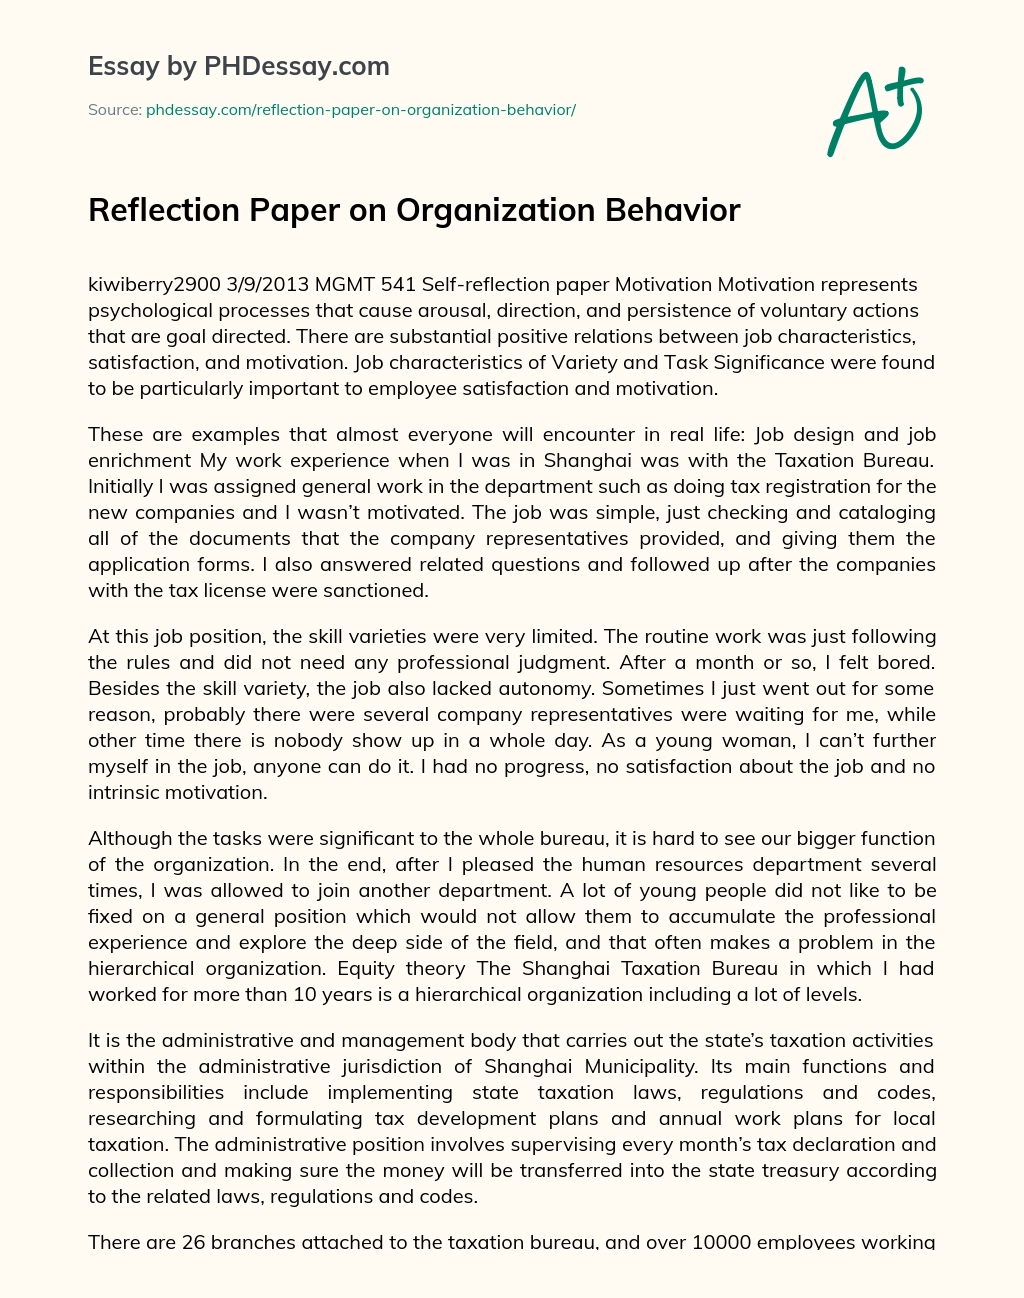 Reflection Paper on Organization Behavior essay